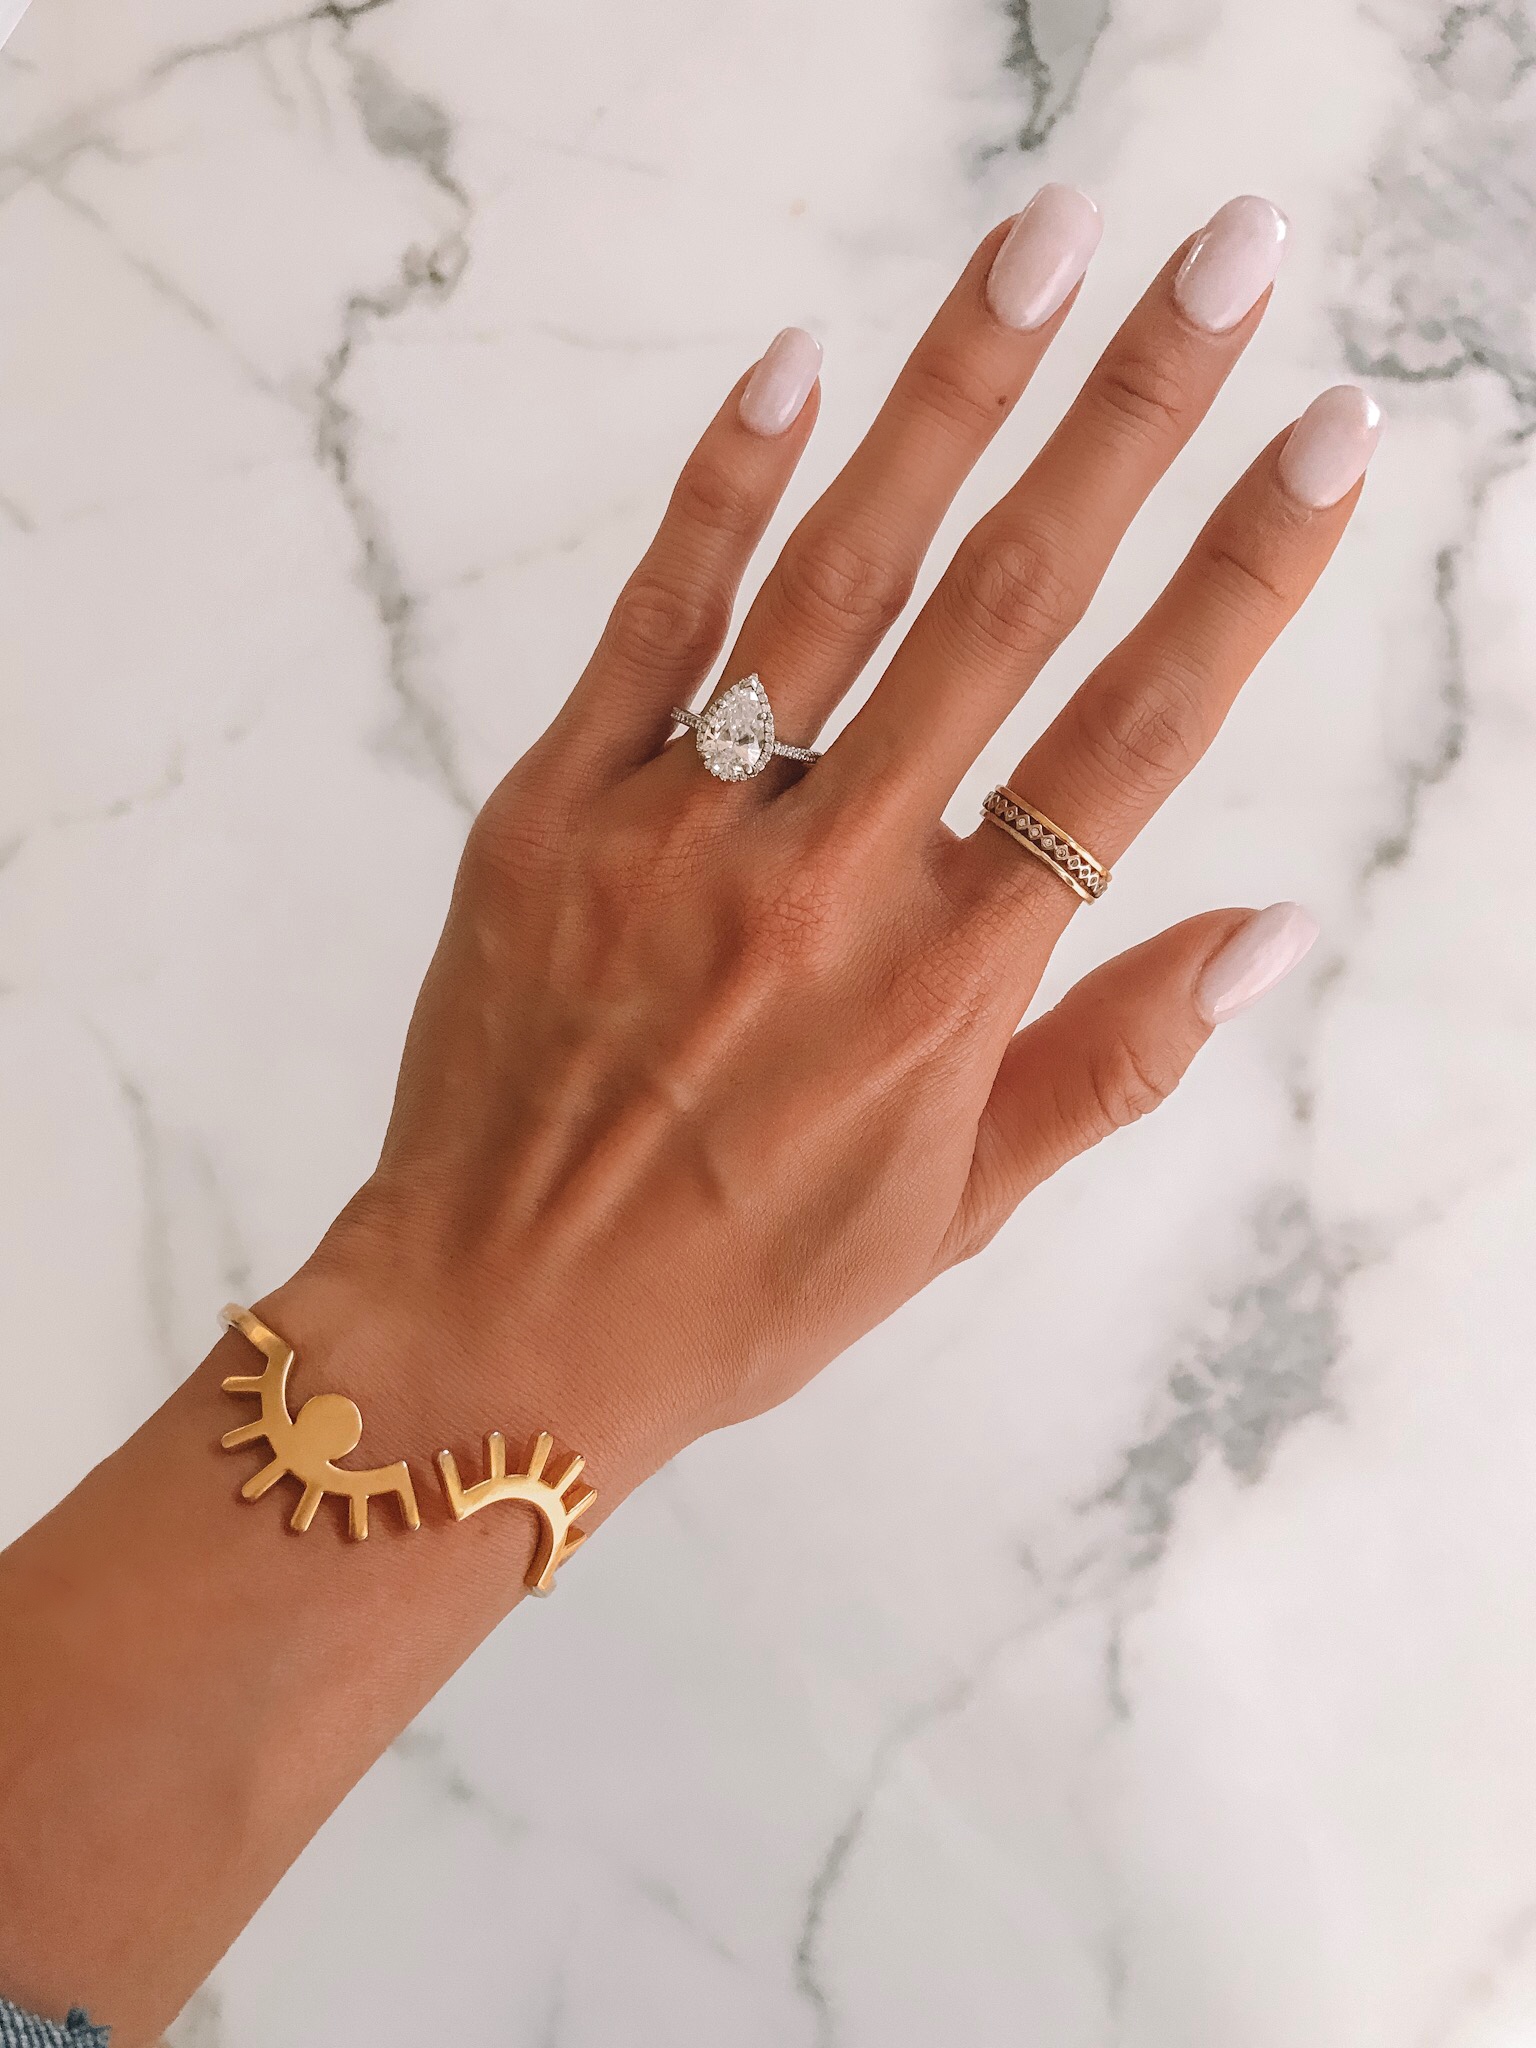 pear shaped halo diamond engagement ring